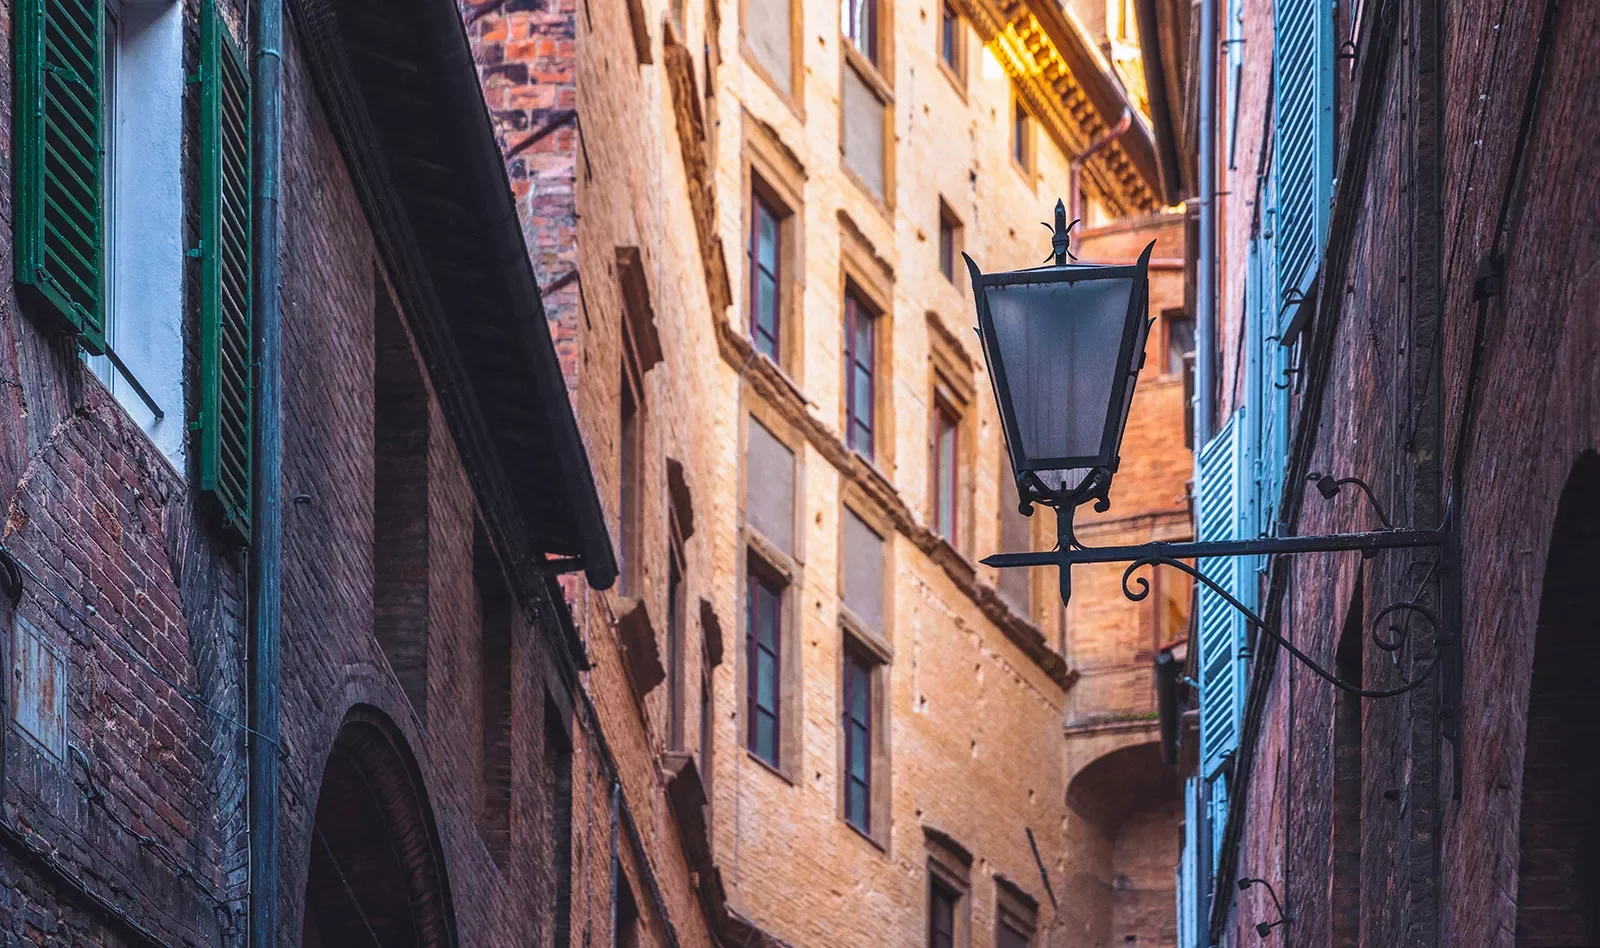 Shot of Italian alleyway, tall buildings, lamp.